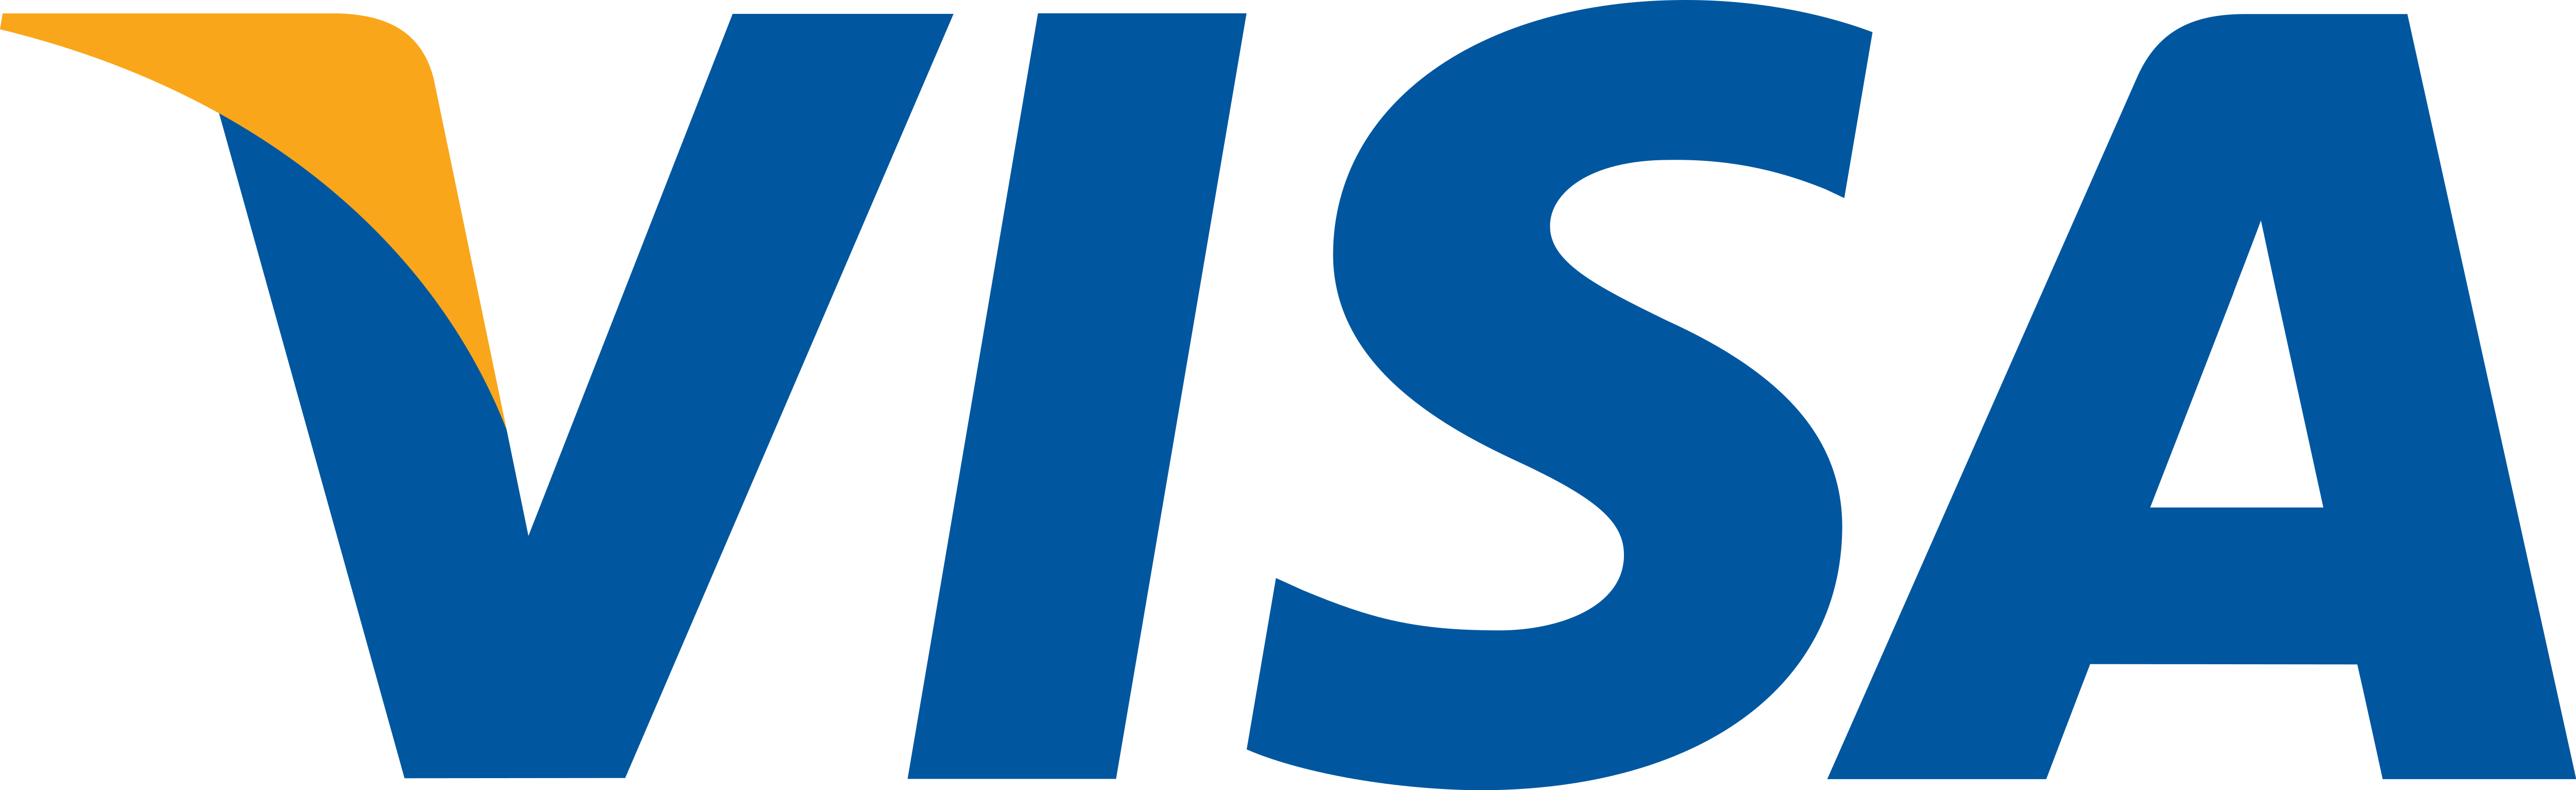 Visa Logo Png Transparent Images Png All Hot Sex Picture